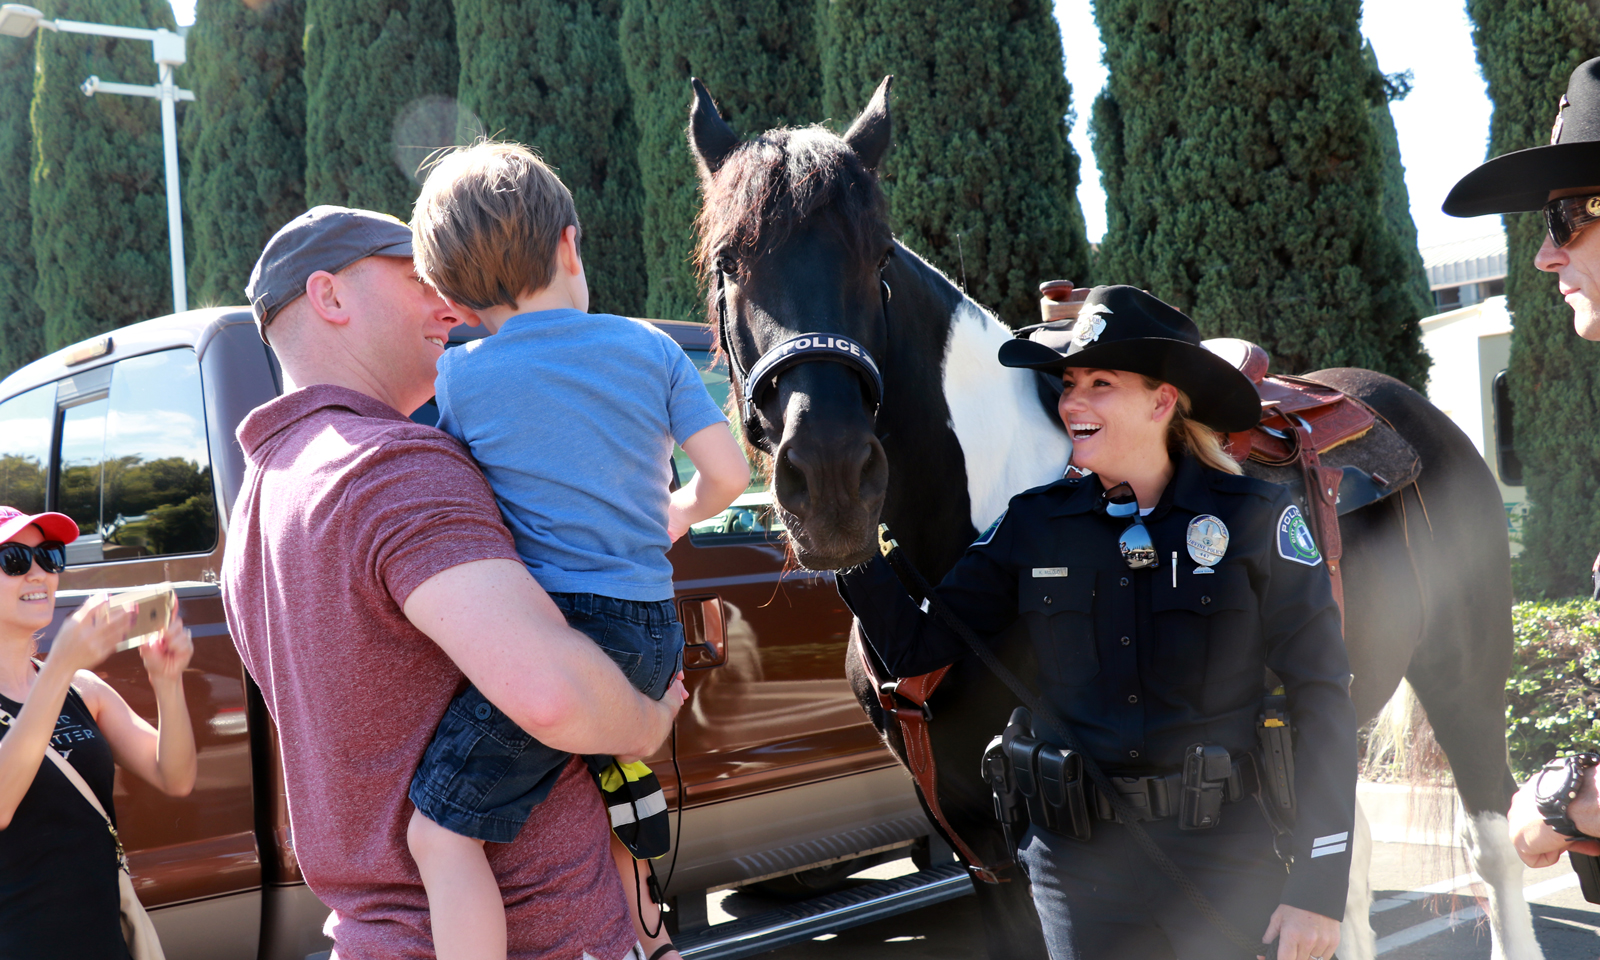 Police horses build community bond